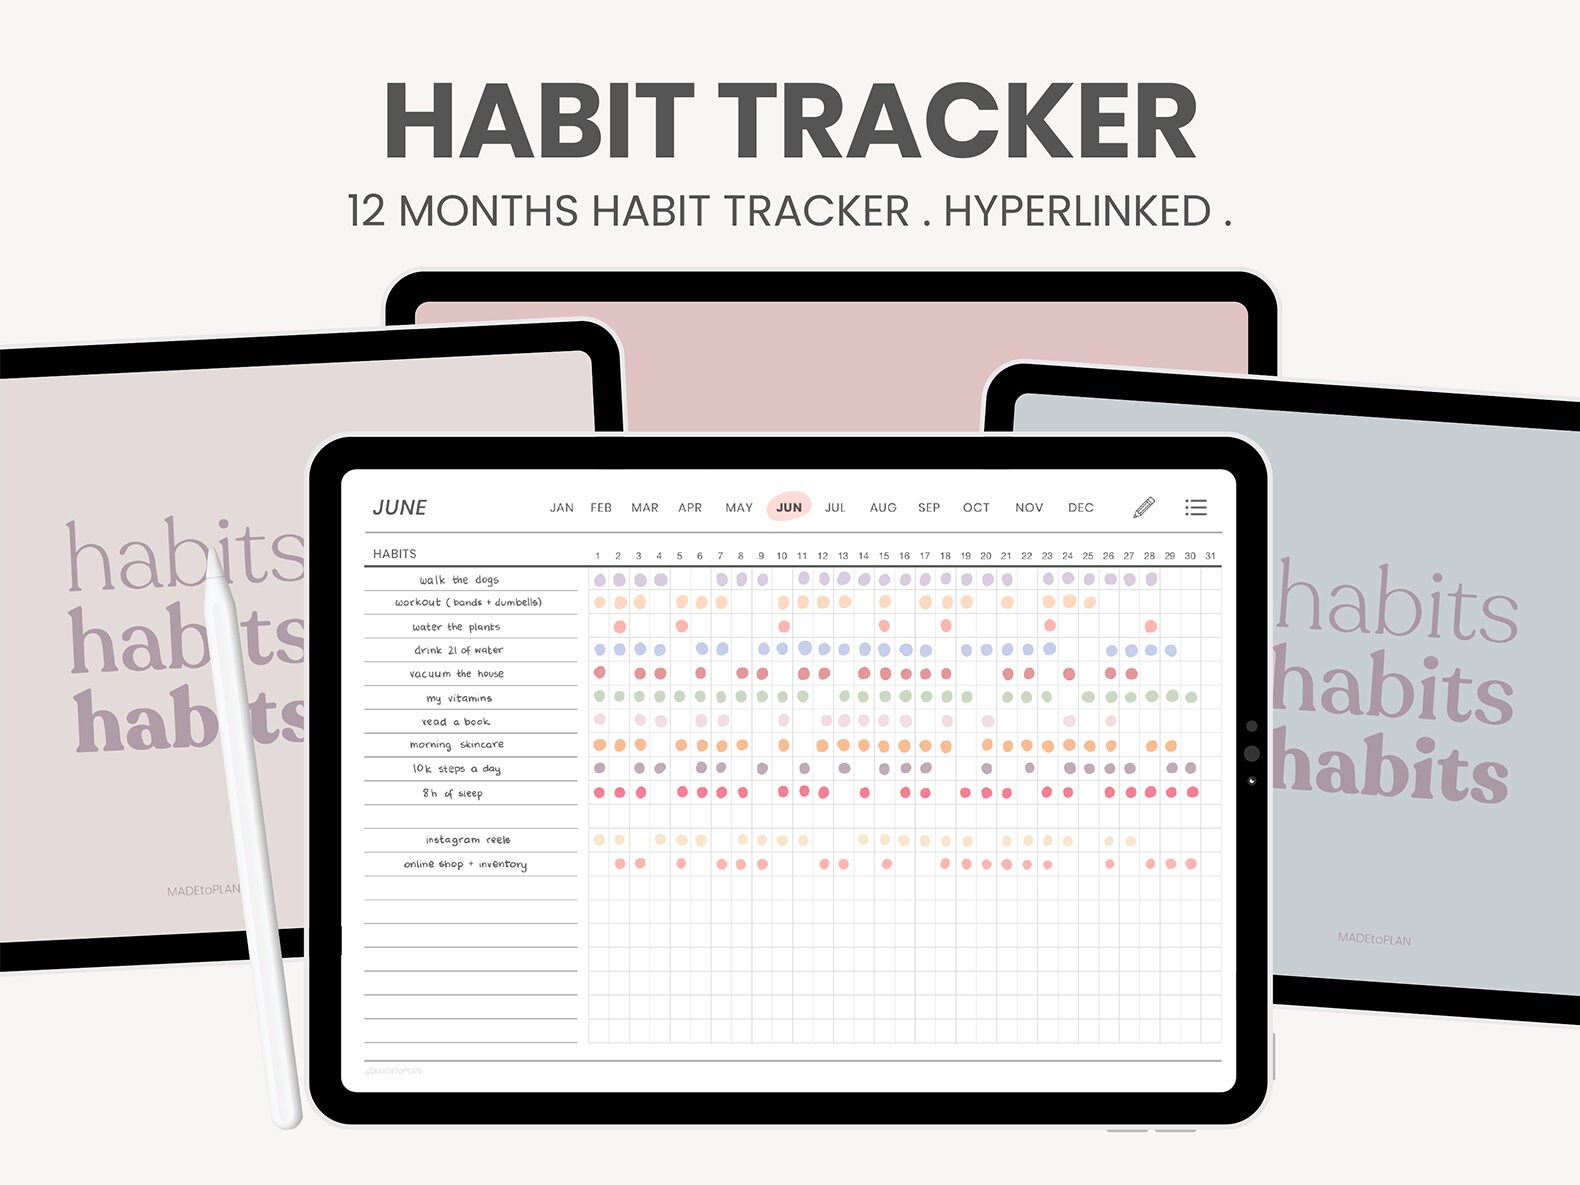 Habit-Tracker Templates and Ideas on Instagram